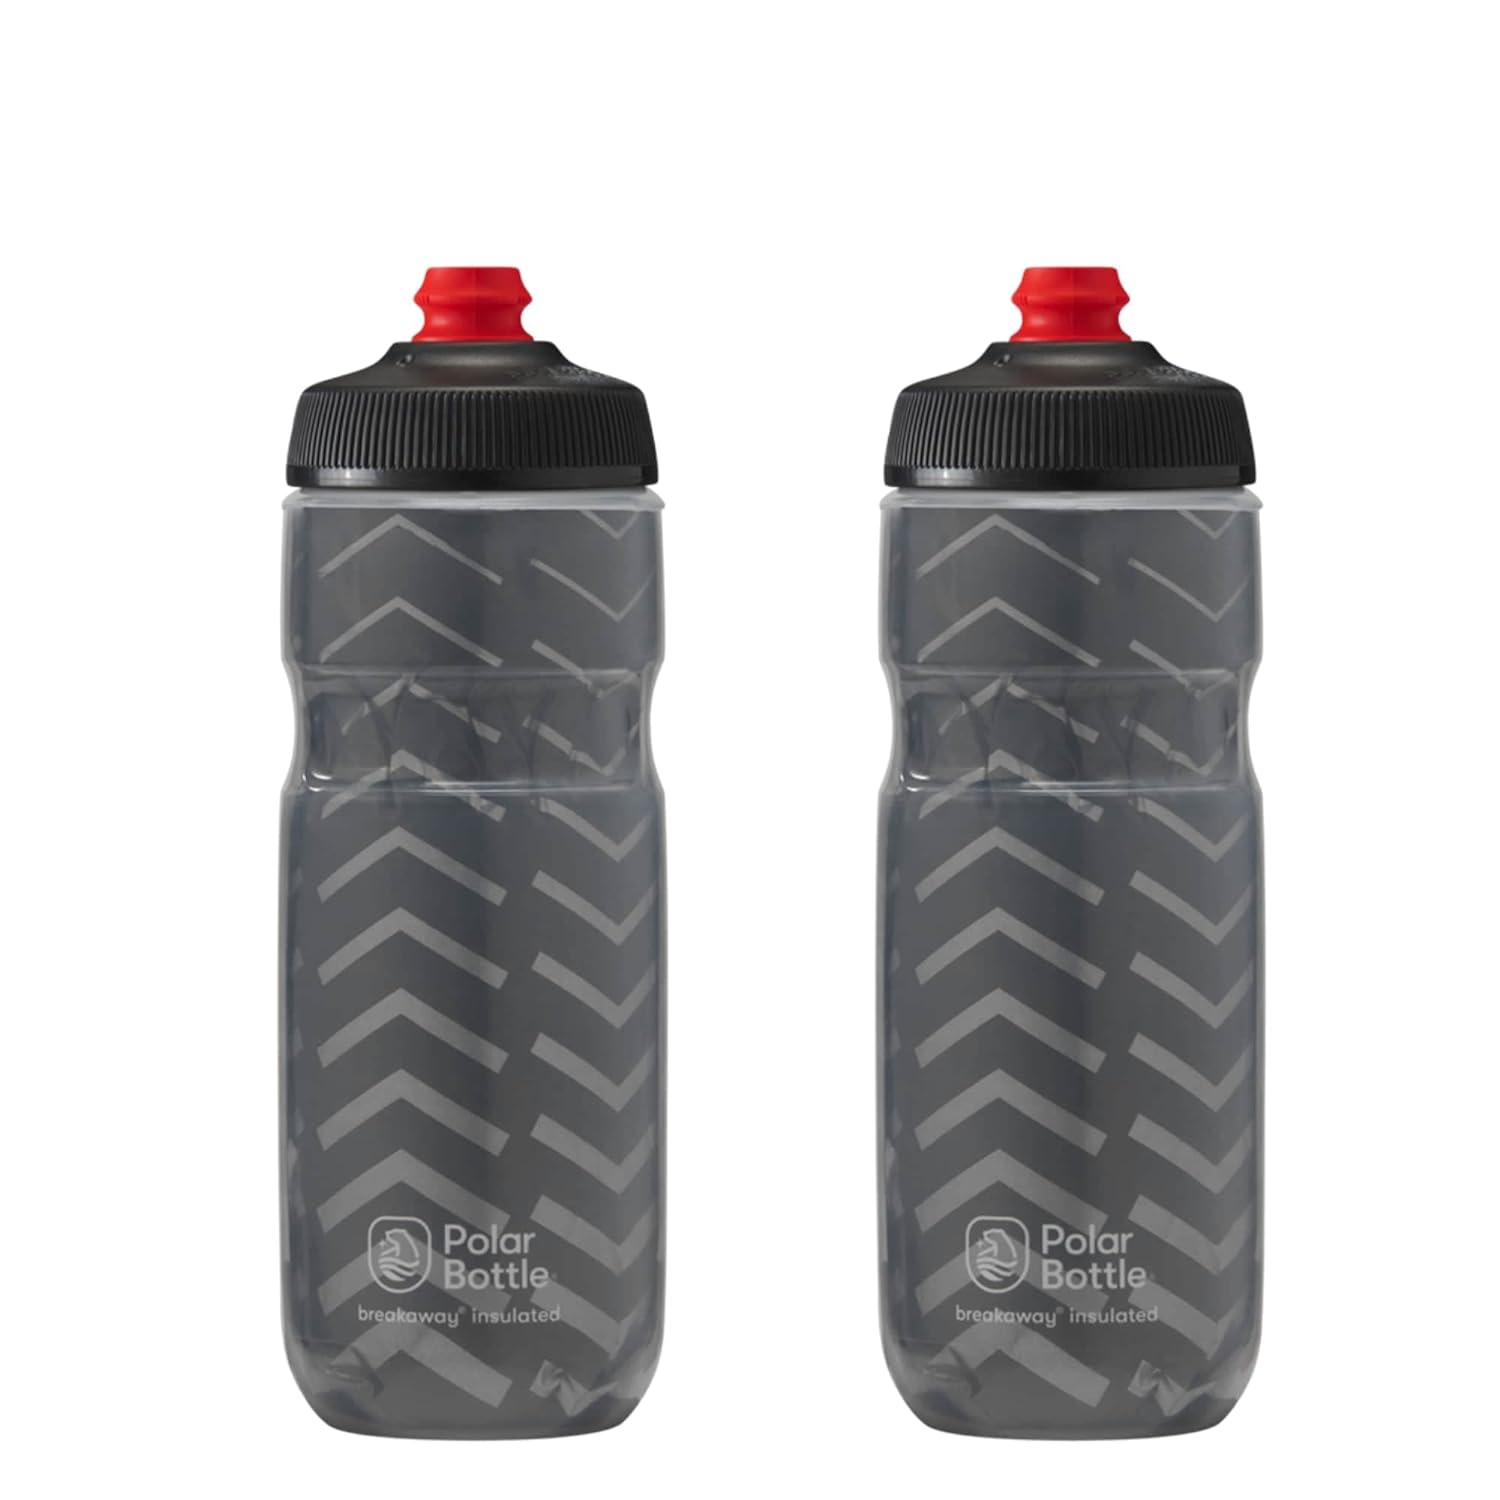 Polar Bottle Breakaway Insulated Bike Water Bottle 2-Pack - BPA Free, Cycling & Sports Squeeze Bottle (Bolt Charcoal 20oz)